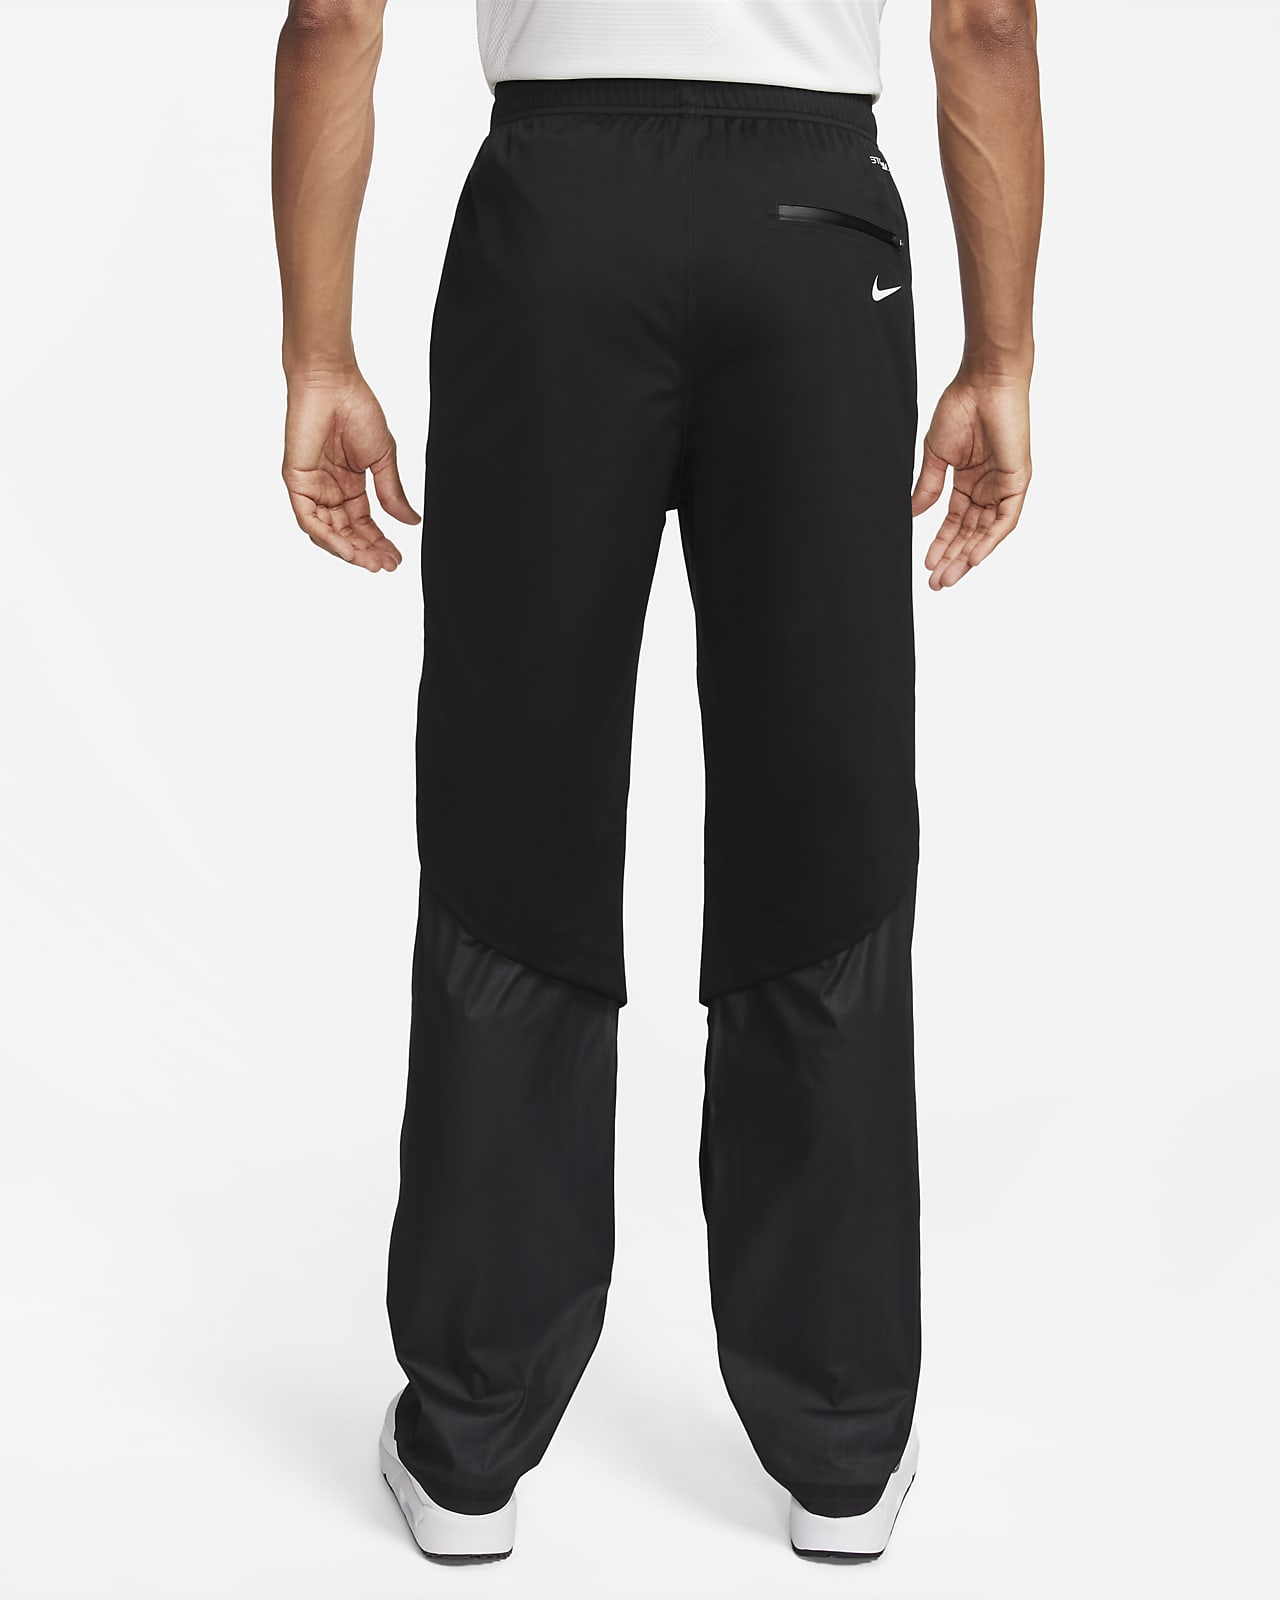 Nike Storm-FIT ADV Men's Golf Pants